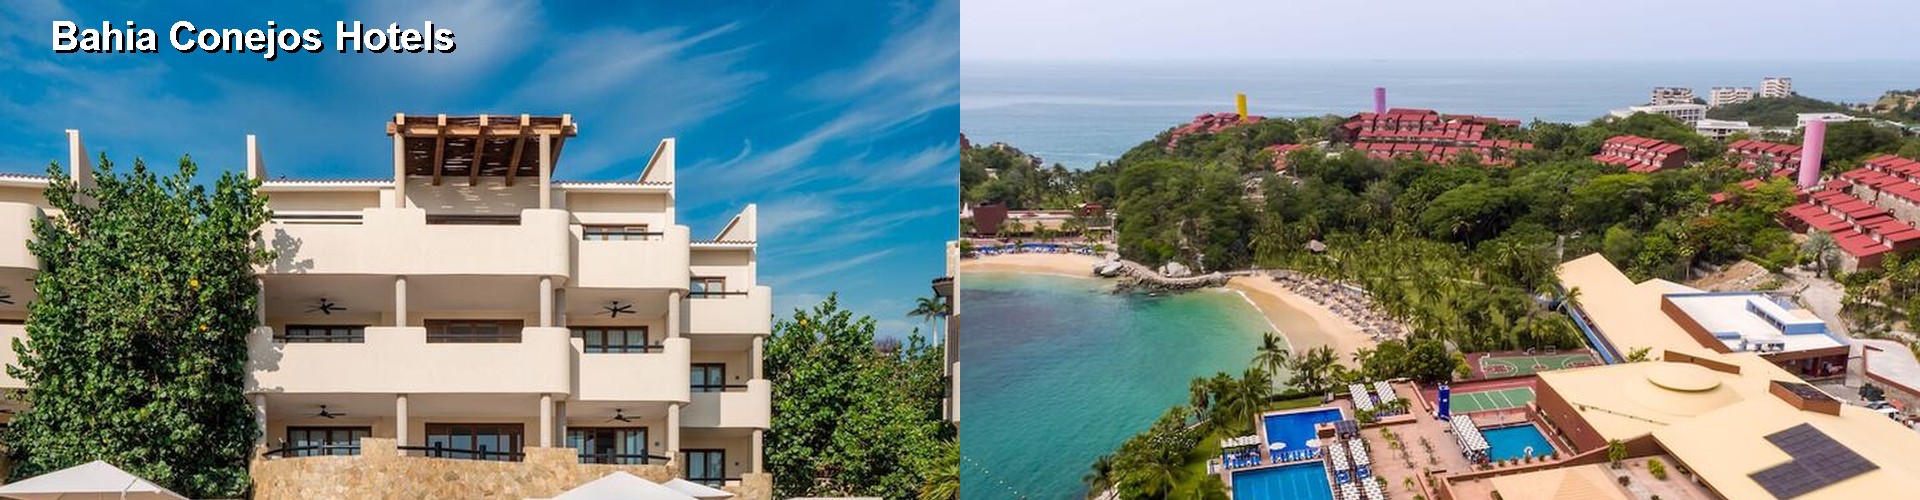 5 Best Hotels near Bahia Conejos